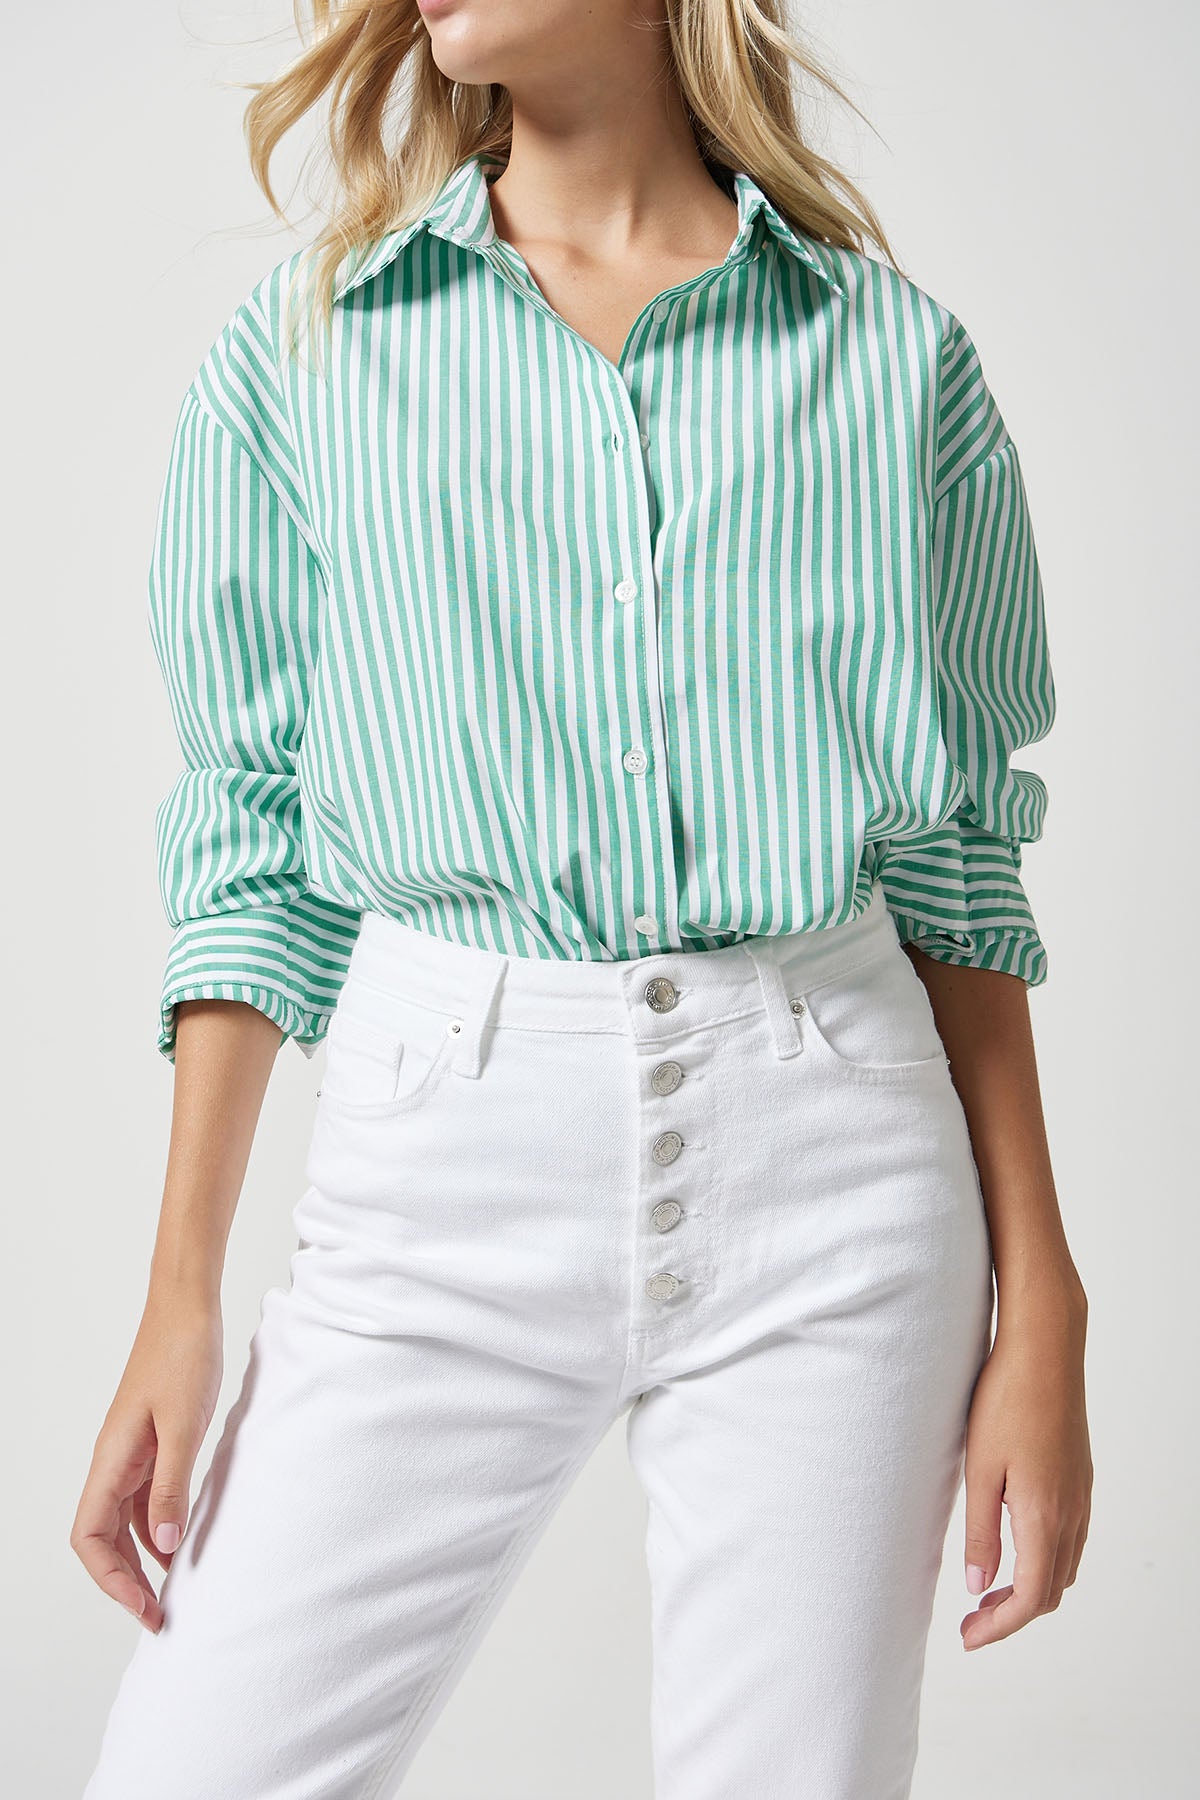 The Shirt - Stripe Green / White